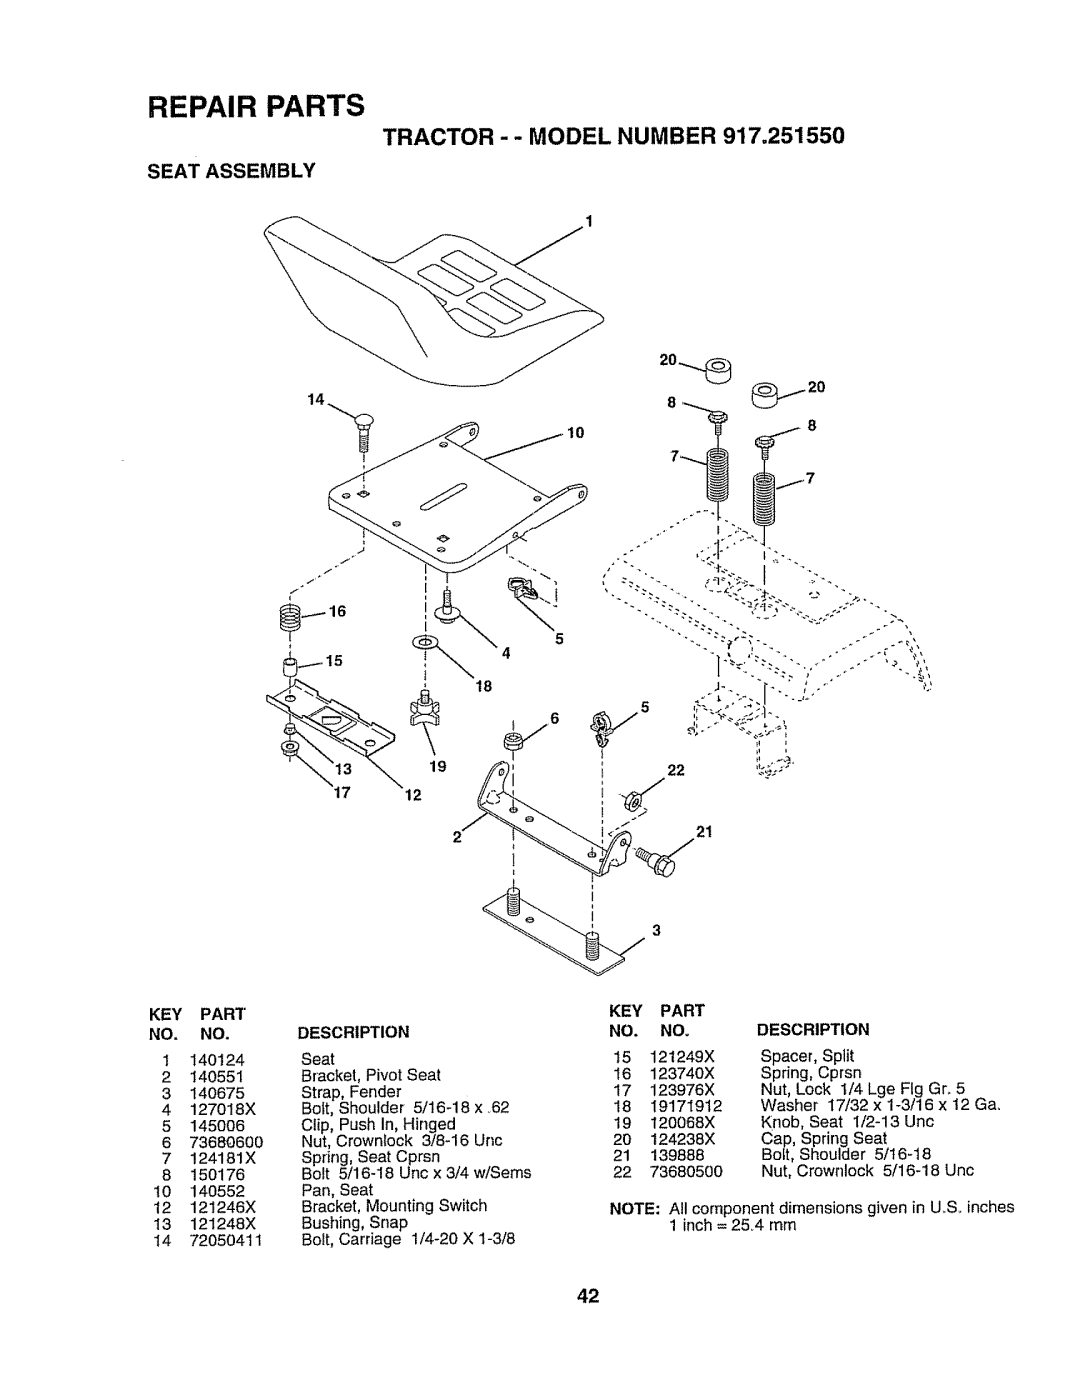 Craftsman 917O251550 owner manual Repair Parts, Seat Assembly, 19 !i 12 2, Description 